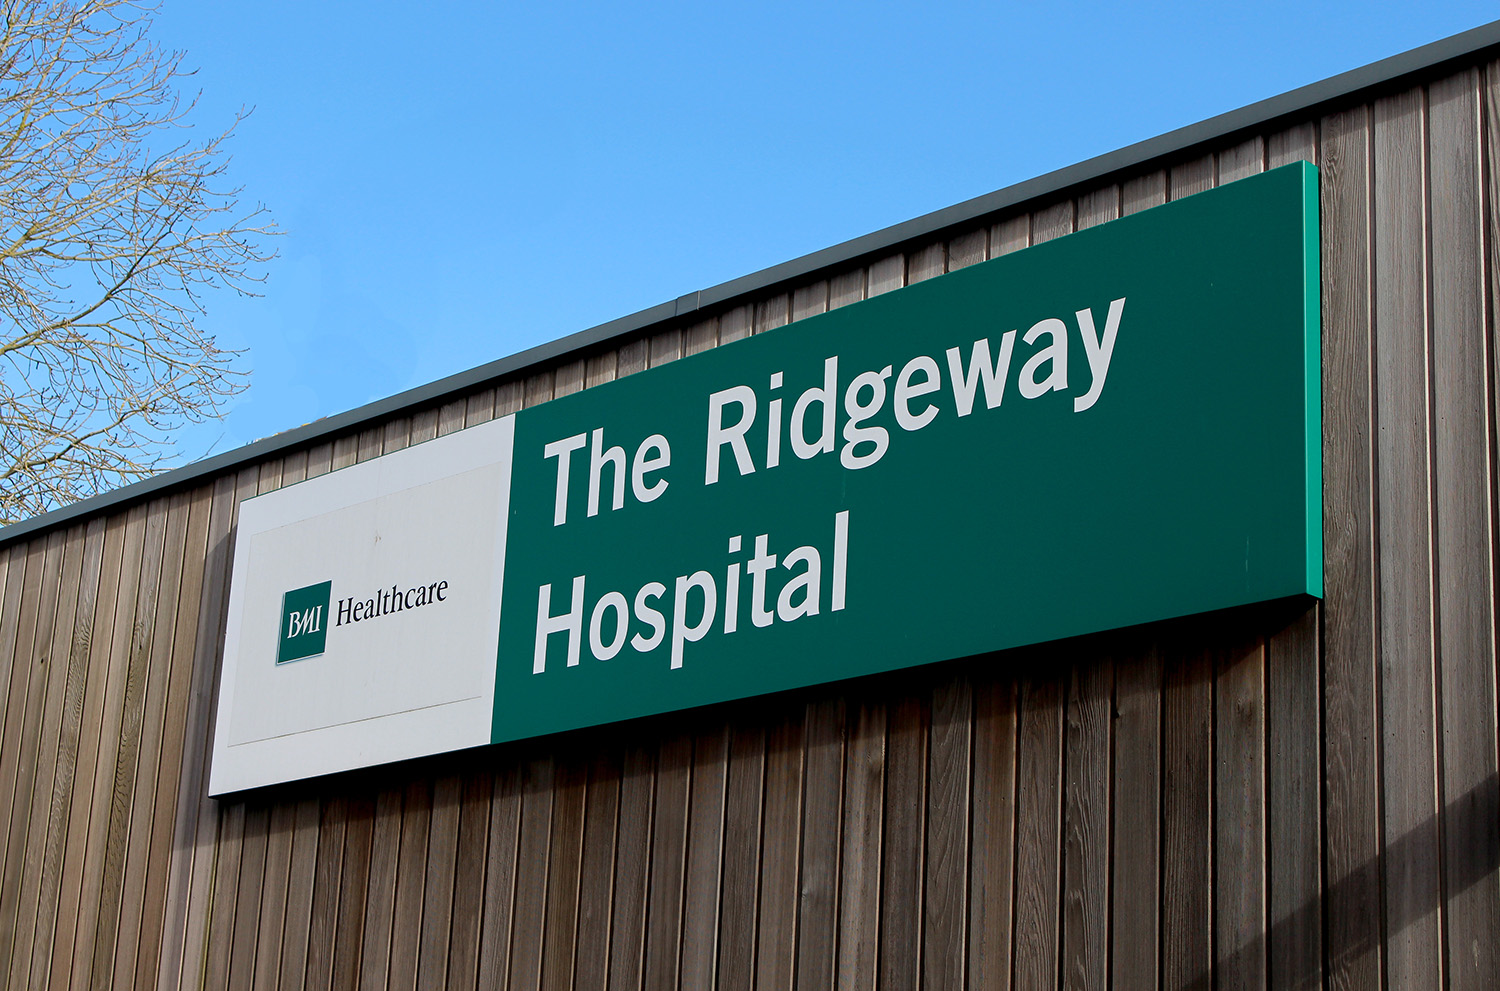 The Ridgeway Hospital